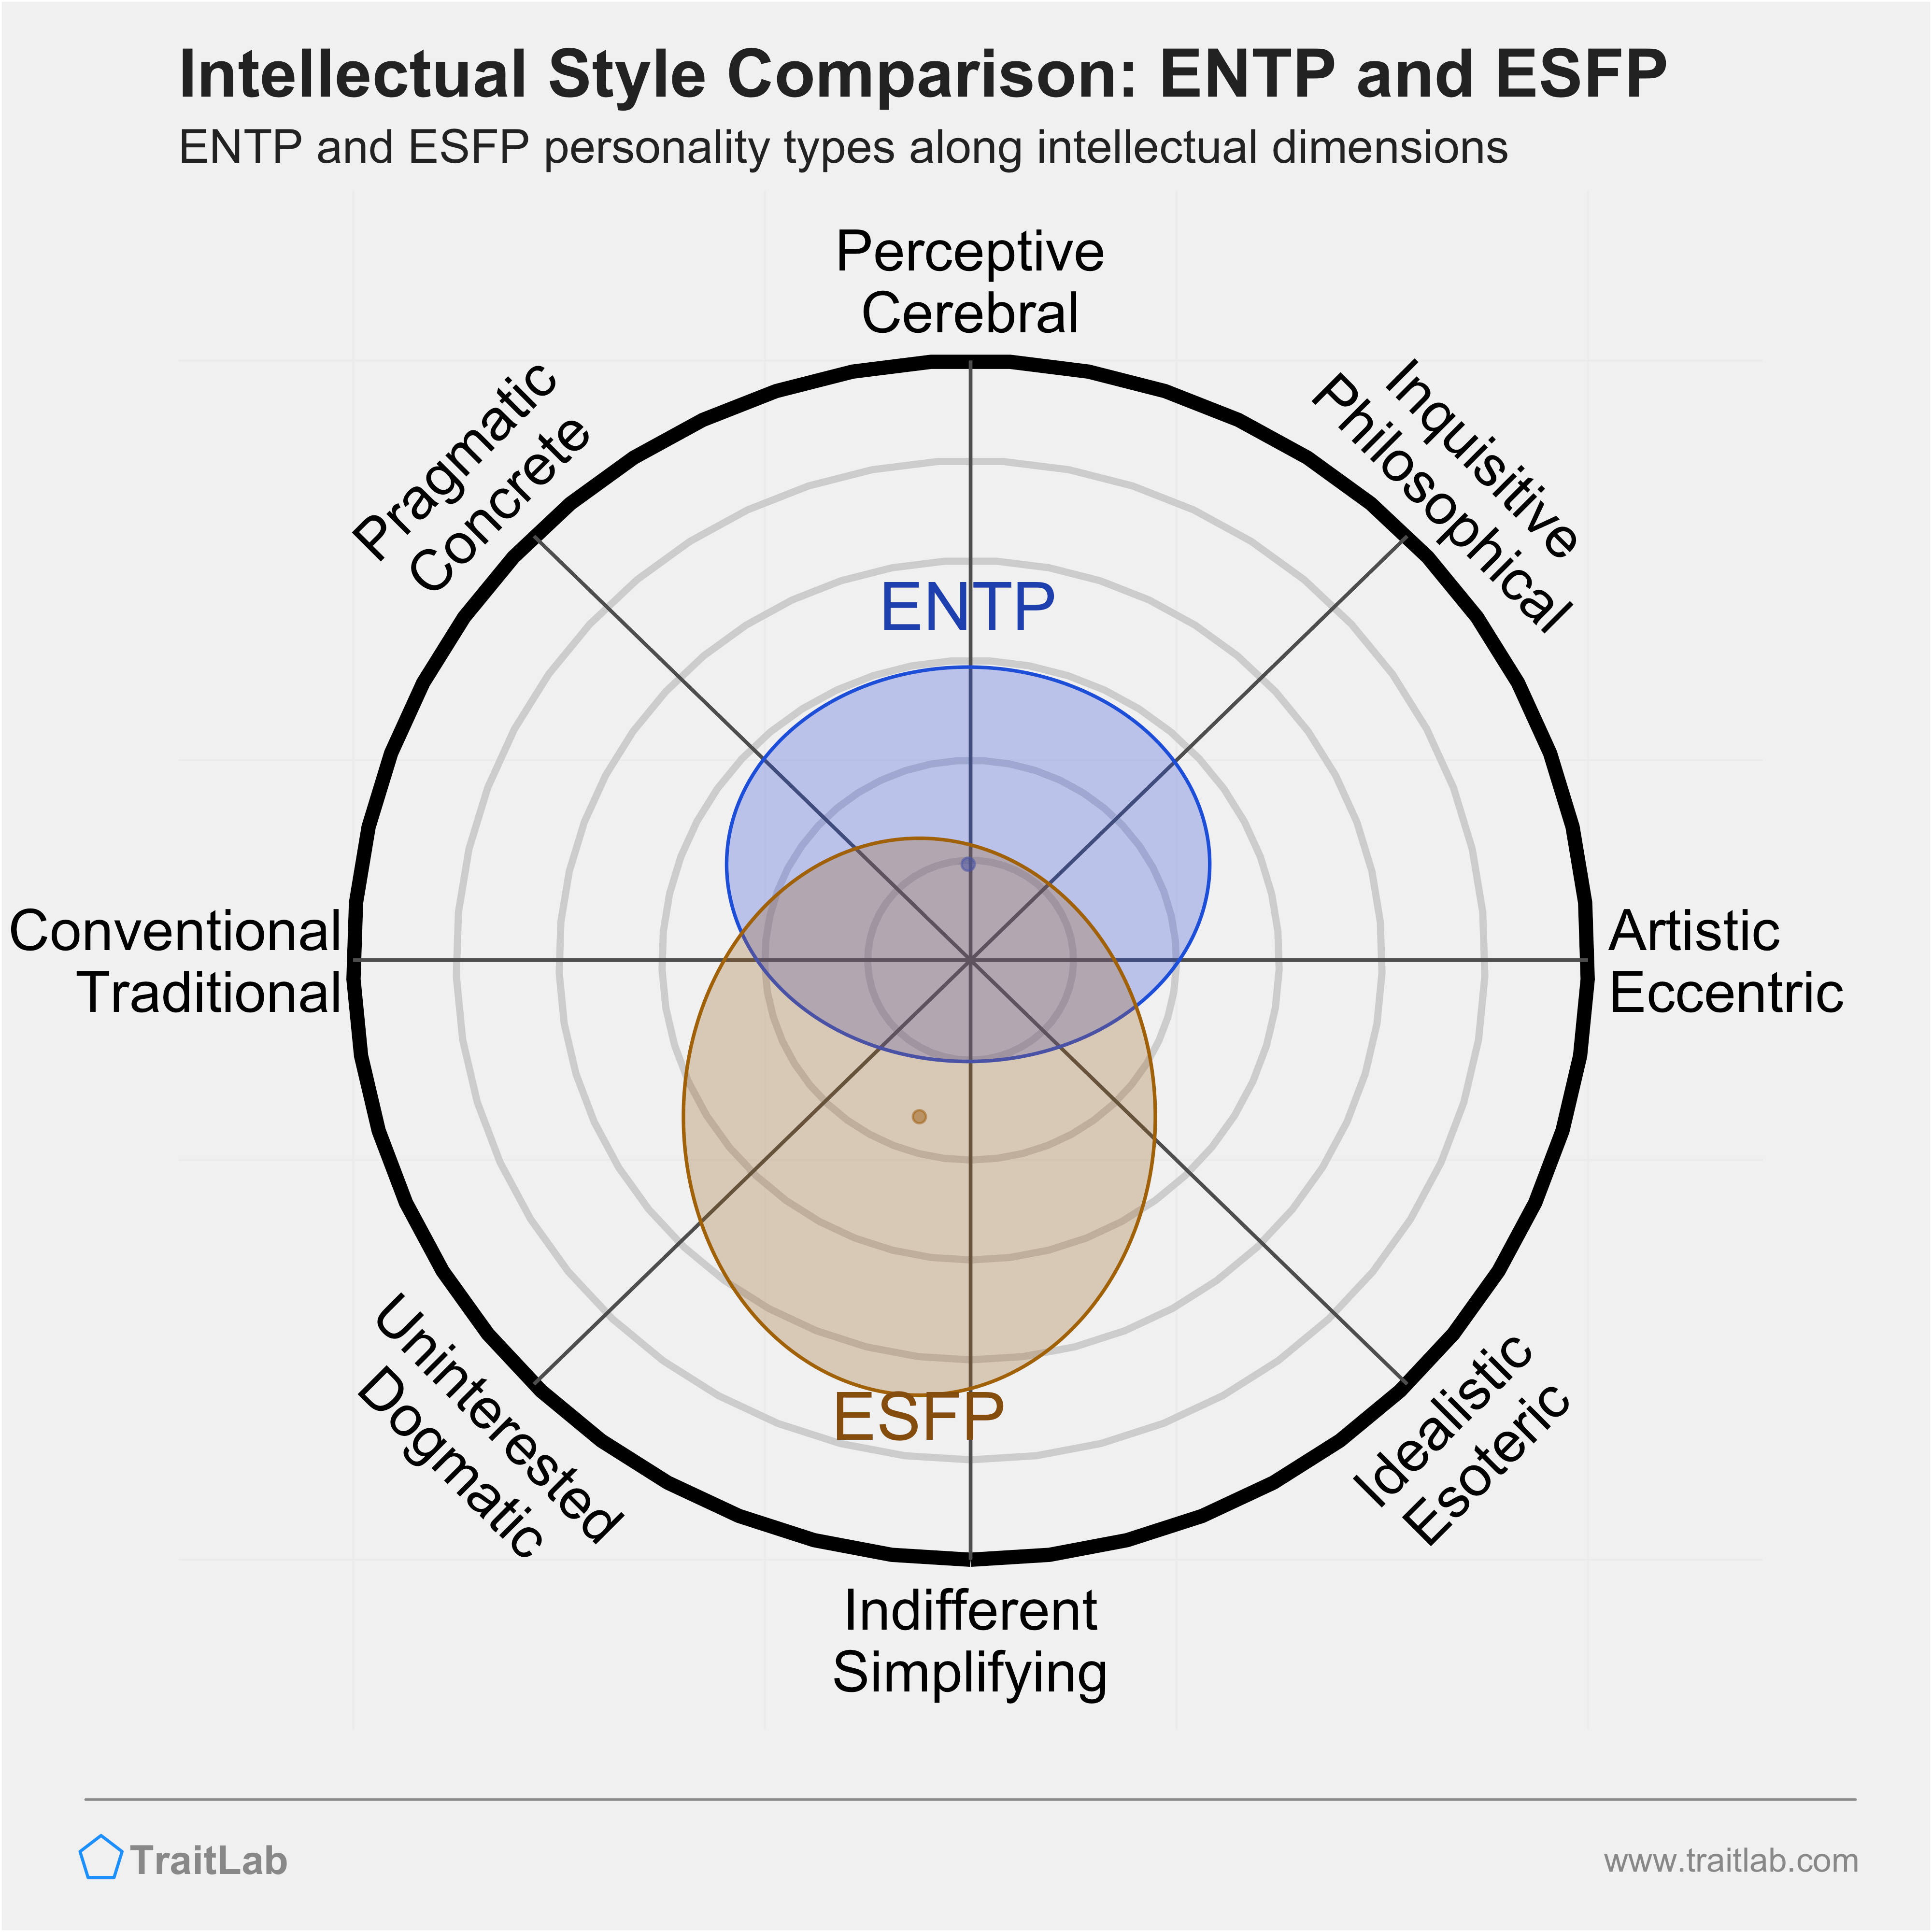 ENTP and ESFP comparison across intellectual dimensions